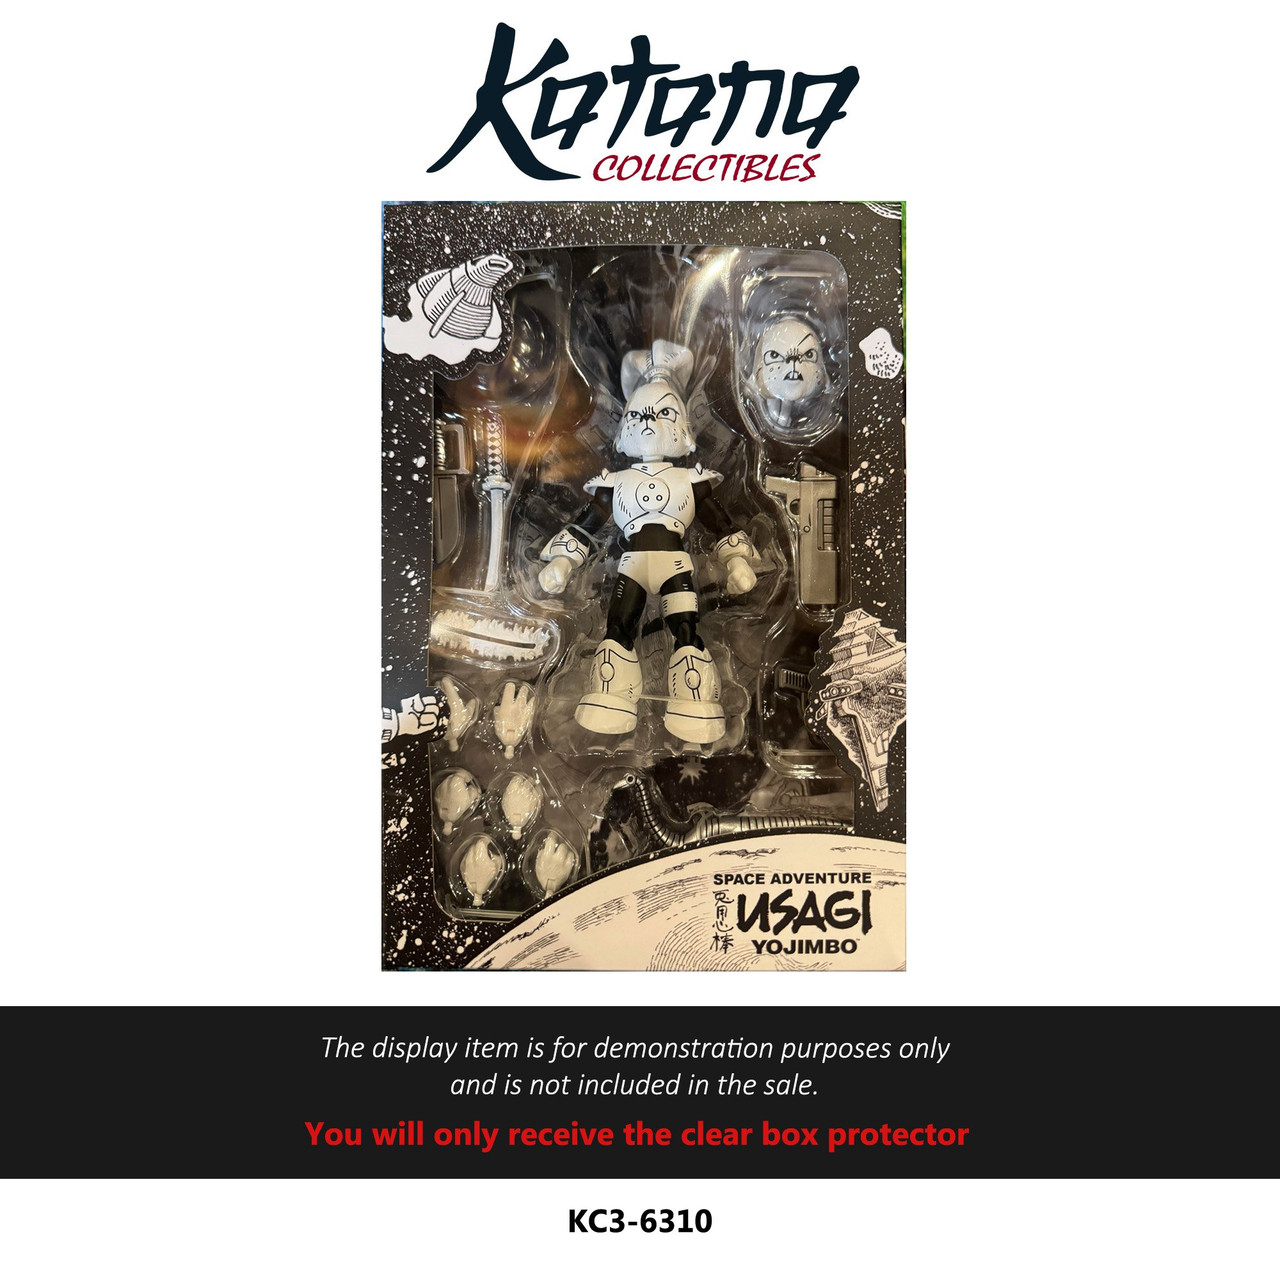 Katana Collectibles Protector For Neca Tmnt Space Adventure - Usagi Yojimbo Black & White